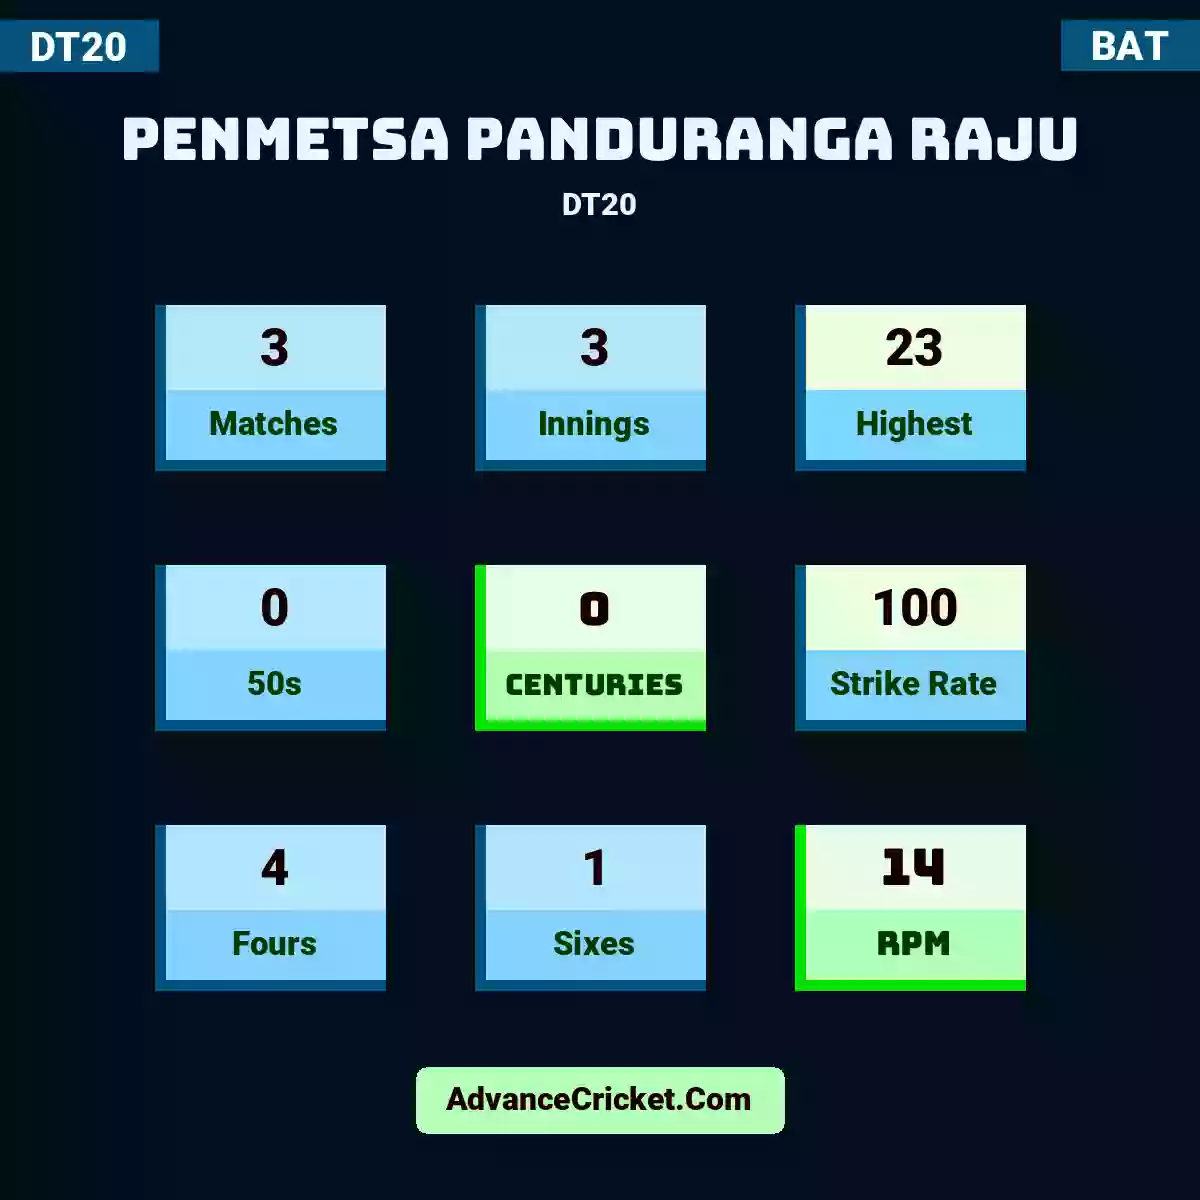 Penmetsa Panduranga Raju DT20 , Penmetsa Panduranga Raju played 3 matches, scored 23 runs as highest, 0 half-centuries, and 0 centuries, with a strike rate of 100. P.Panduranga.Raju hit 4 fours and 1 sixes, with an RPM of 14.